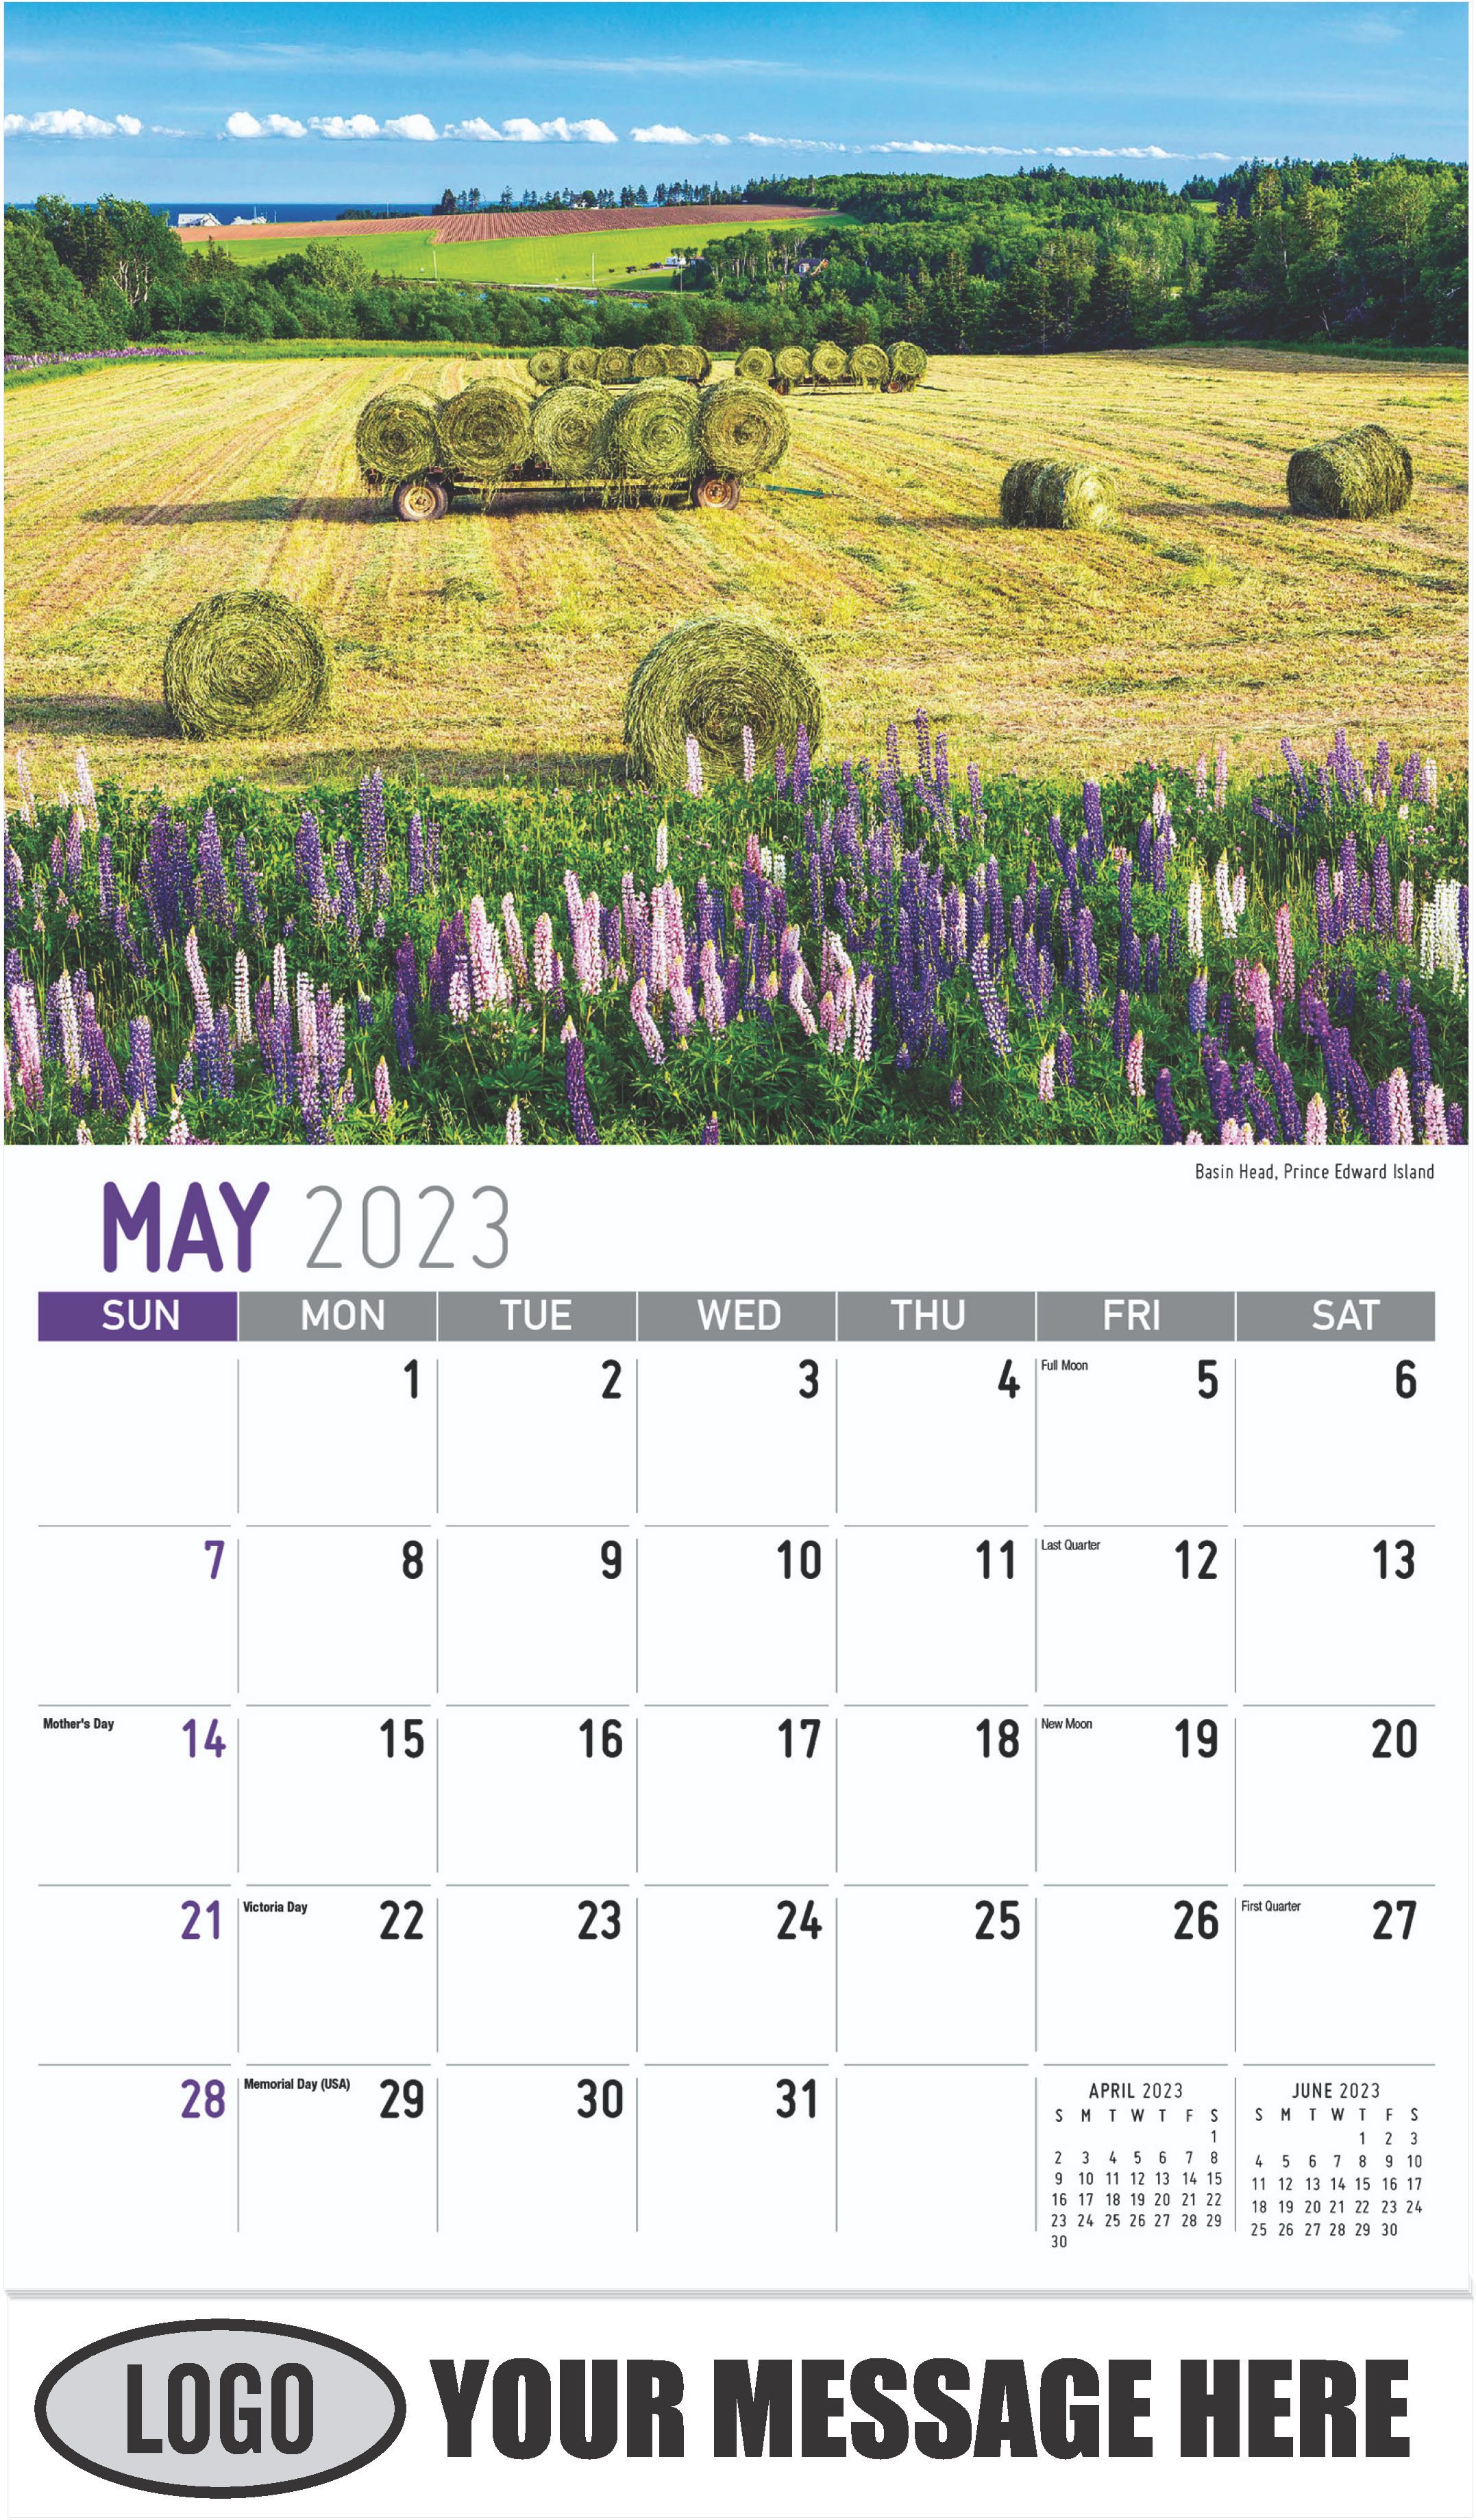 Basin Head, Prince Edward Island - May - Atlantic Canada 2023 Promotional Calendar